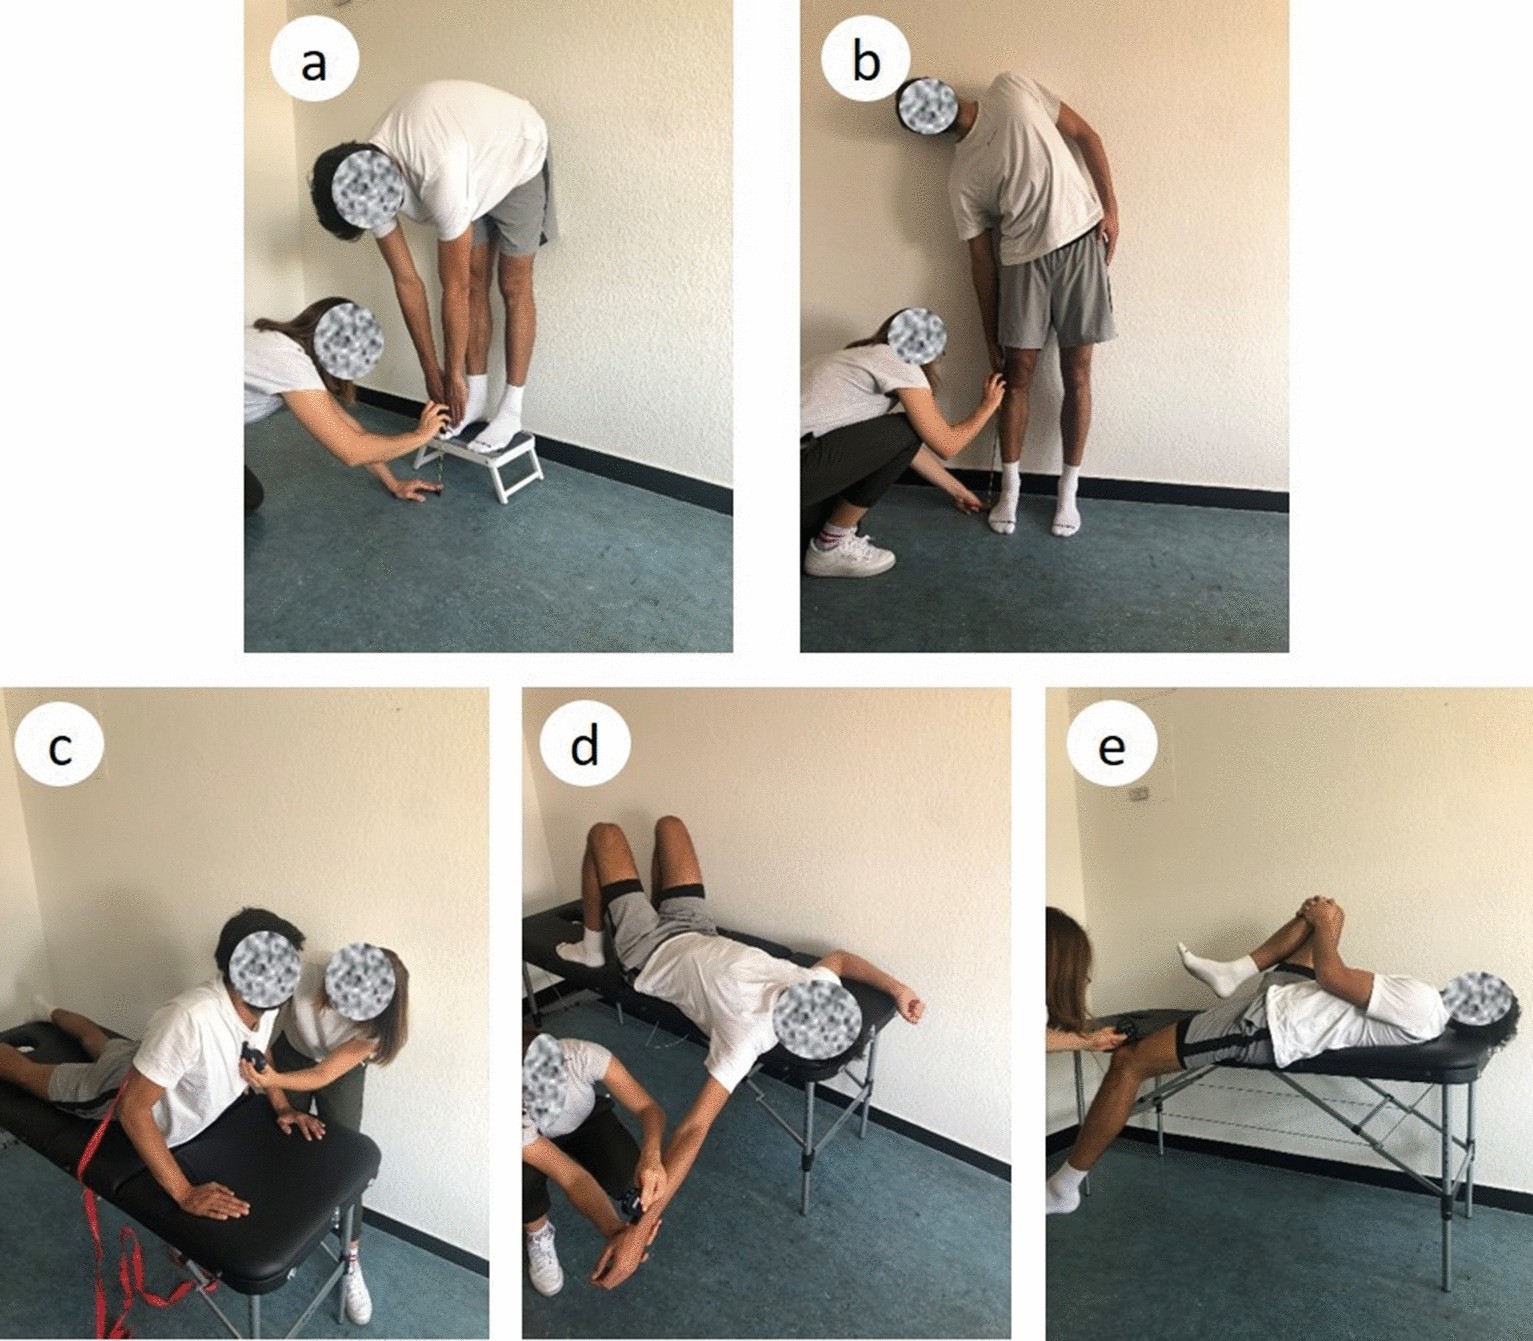 V-Sit Flexibility Test to Measure Hip Range of Motion